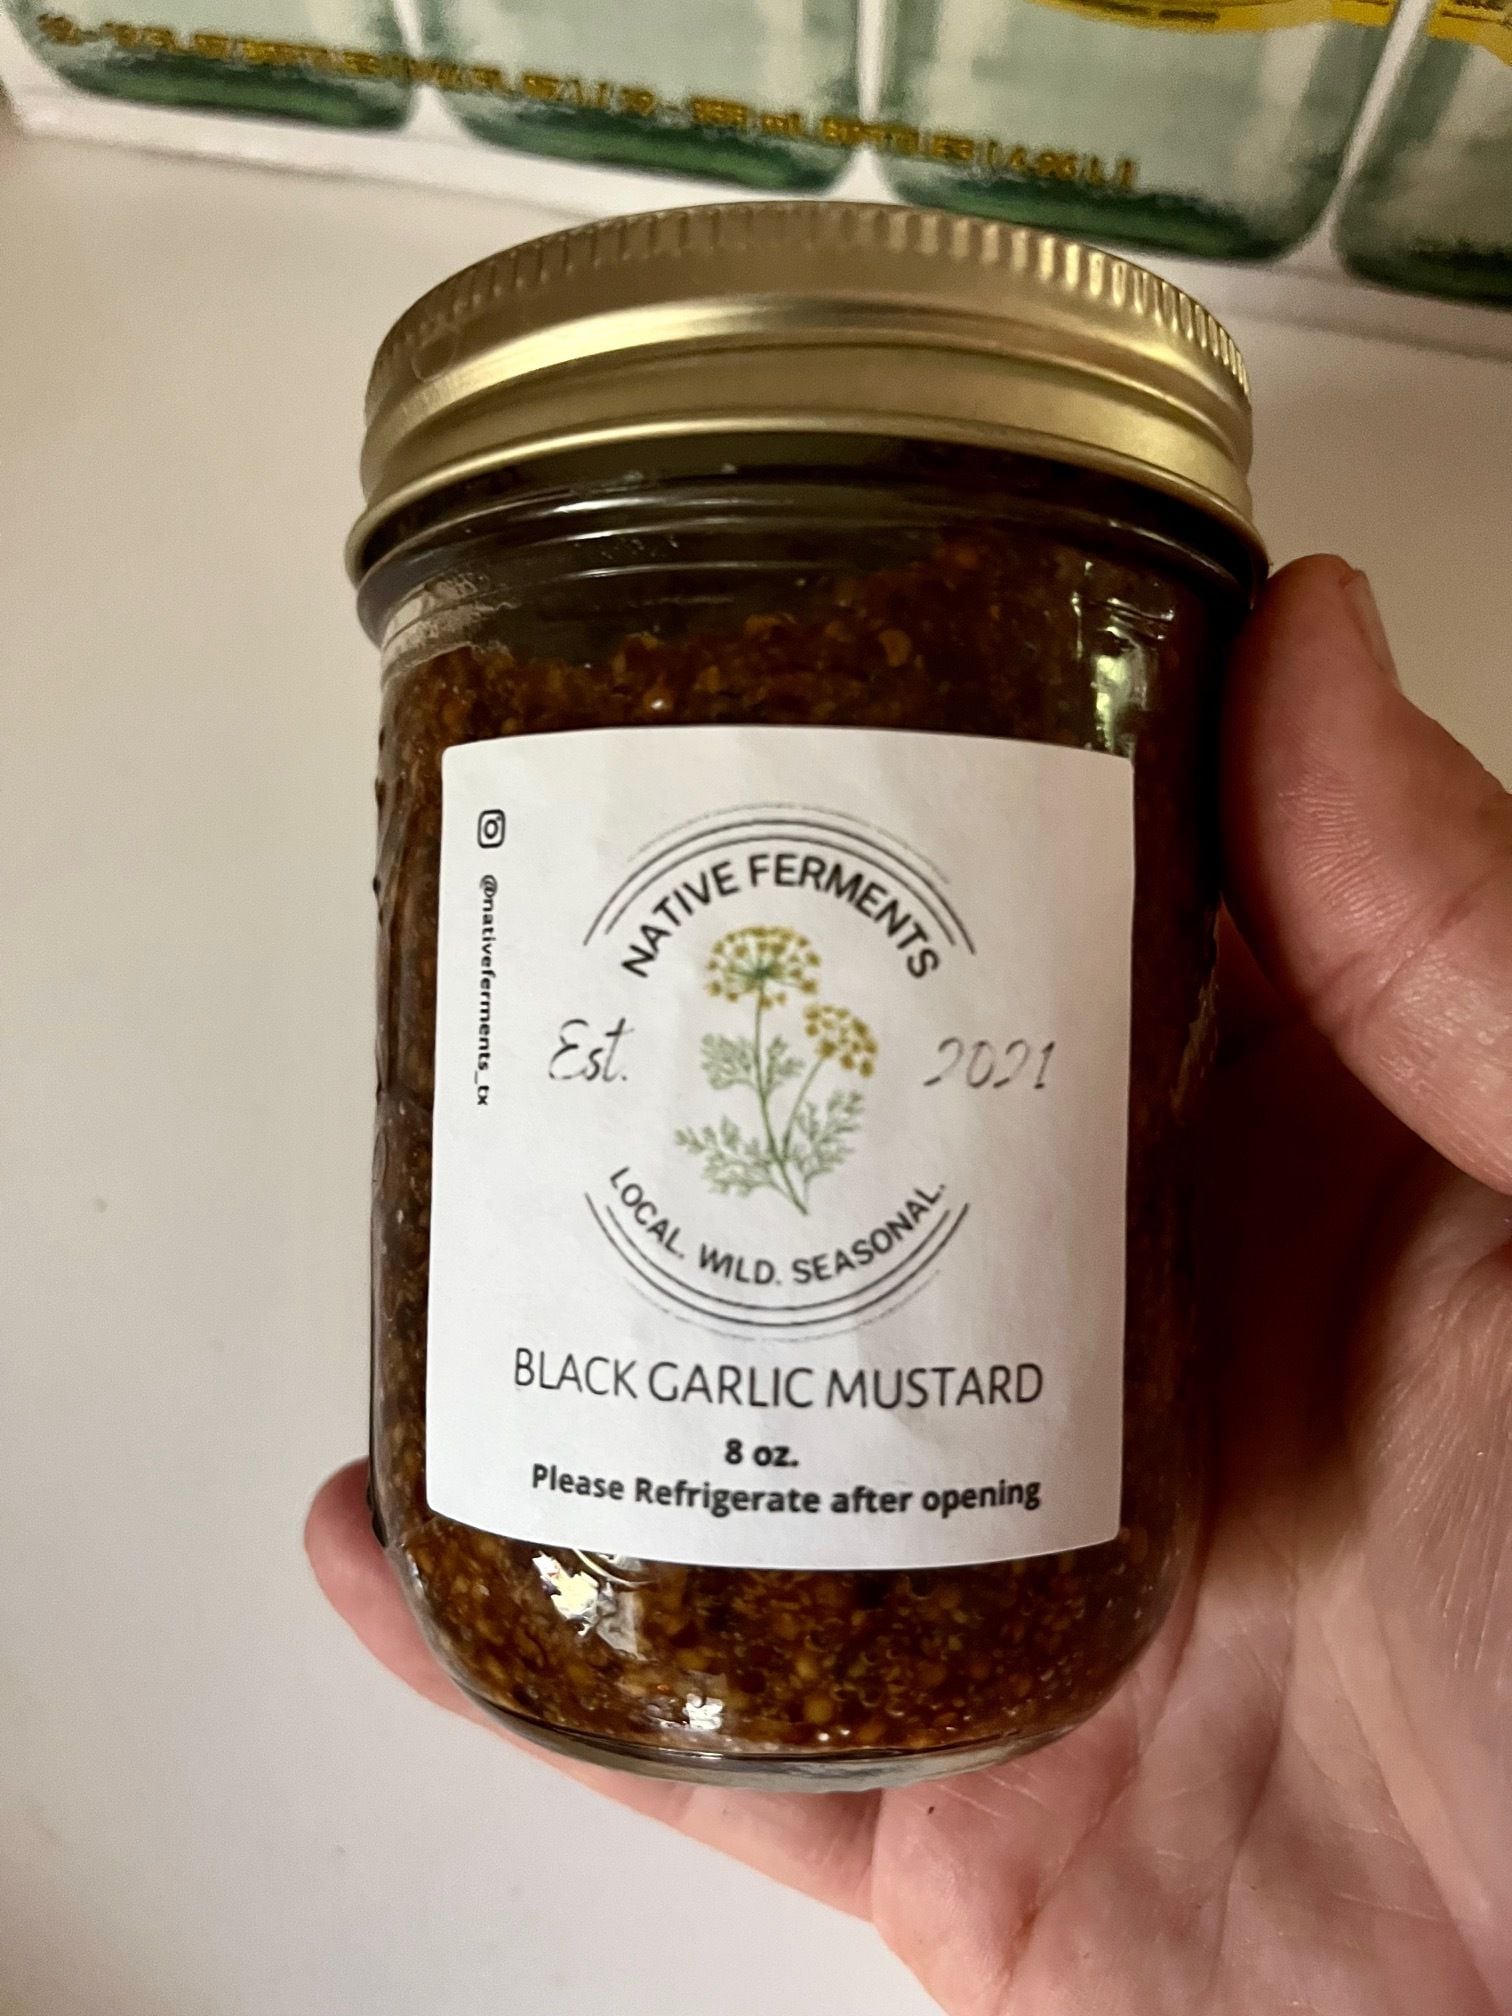 Black garlic mustard from Native Ferments